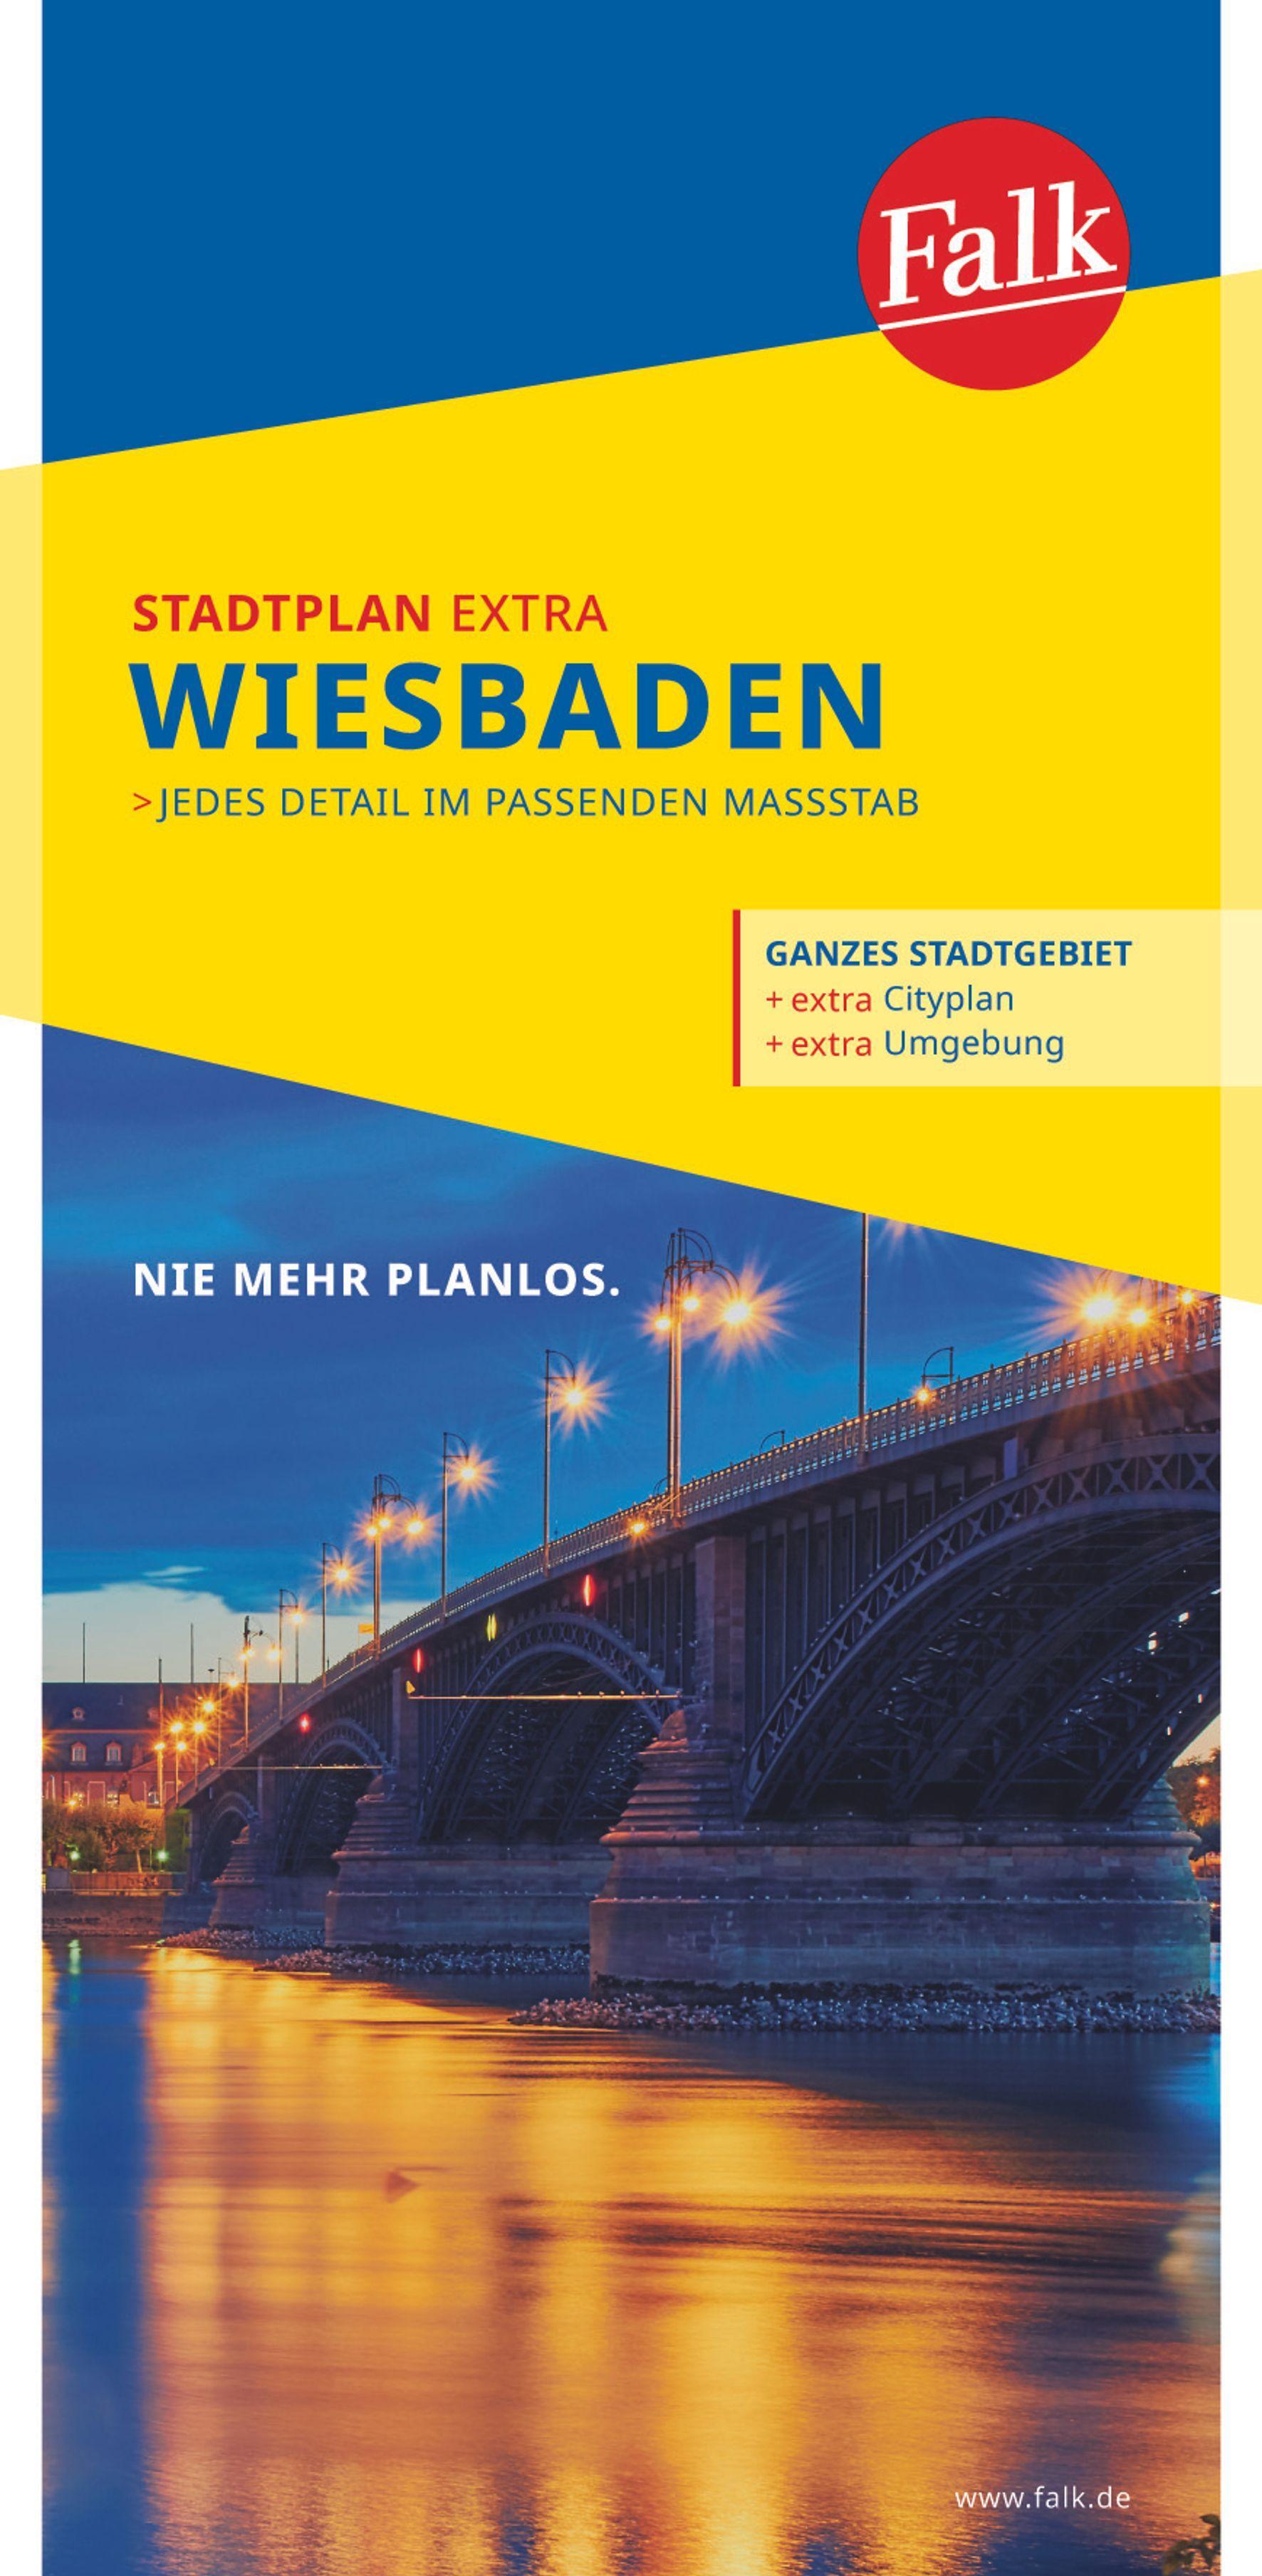 FALK STADTPLAN EXTRA Wiesbaden 1:20 000 (Land-)Karte Deutsch 2020